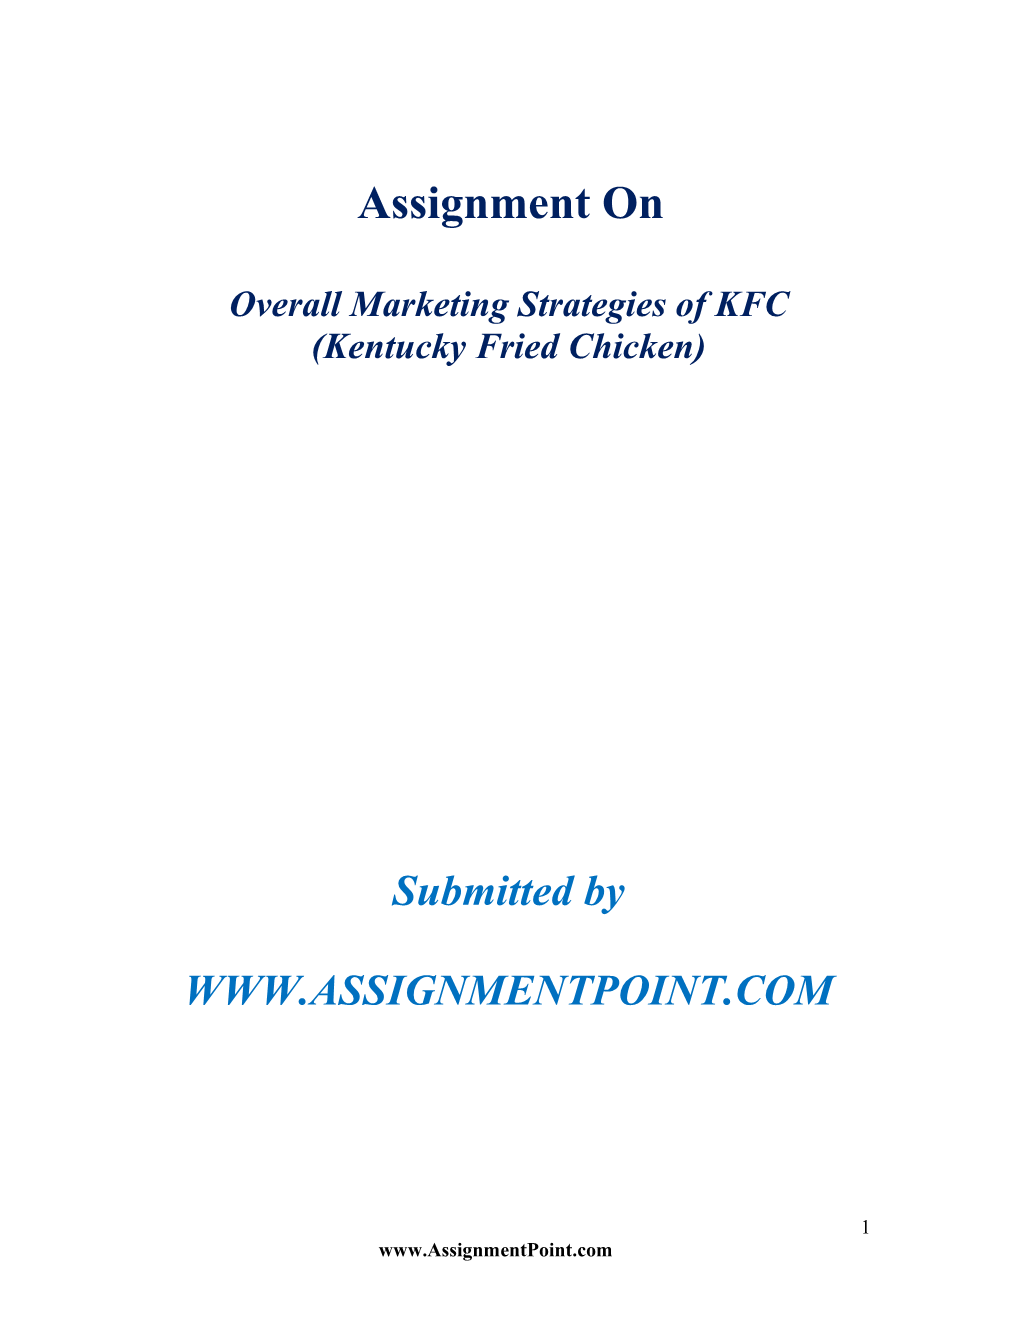 Overall Marketing Strategies of KFC (Kentucky Fried Chicken)